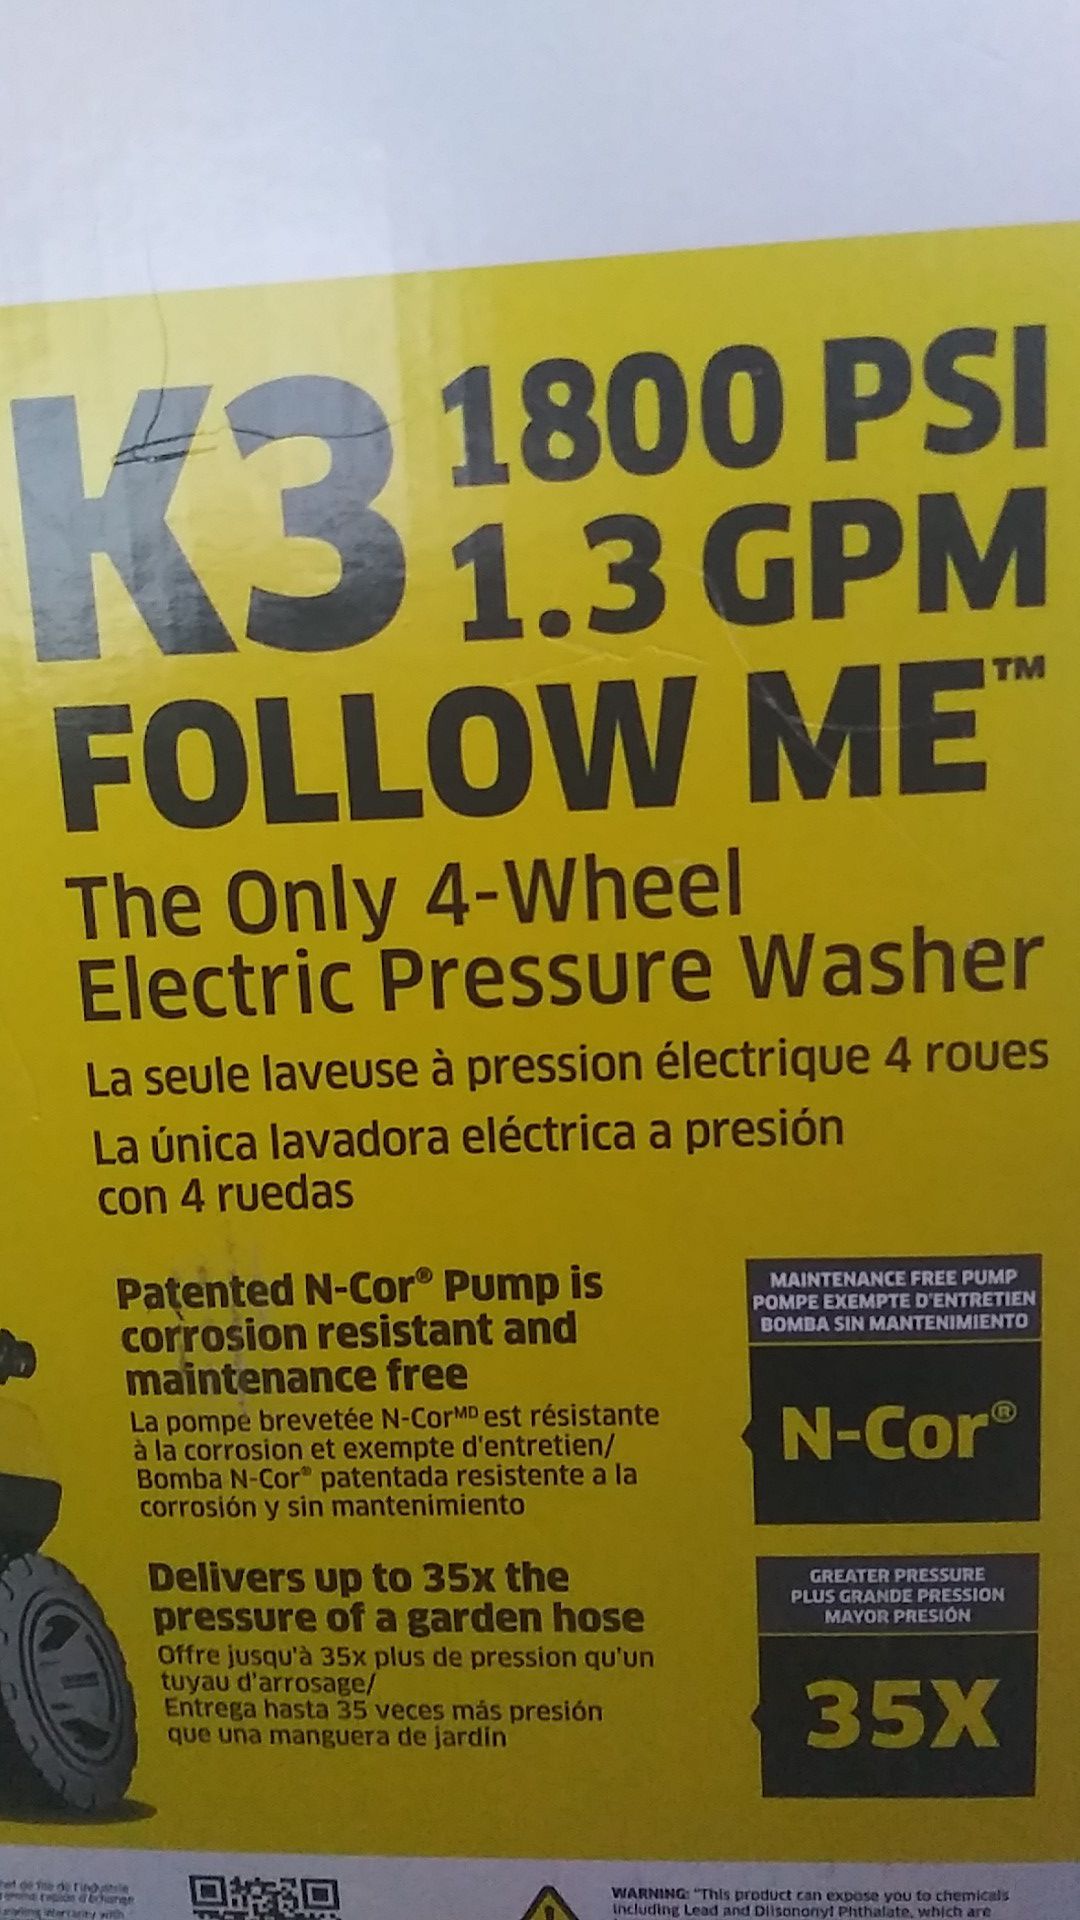 KARCHER K3 1800 PSI PRESSURE WASHER